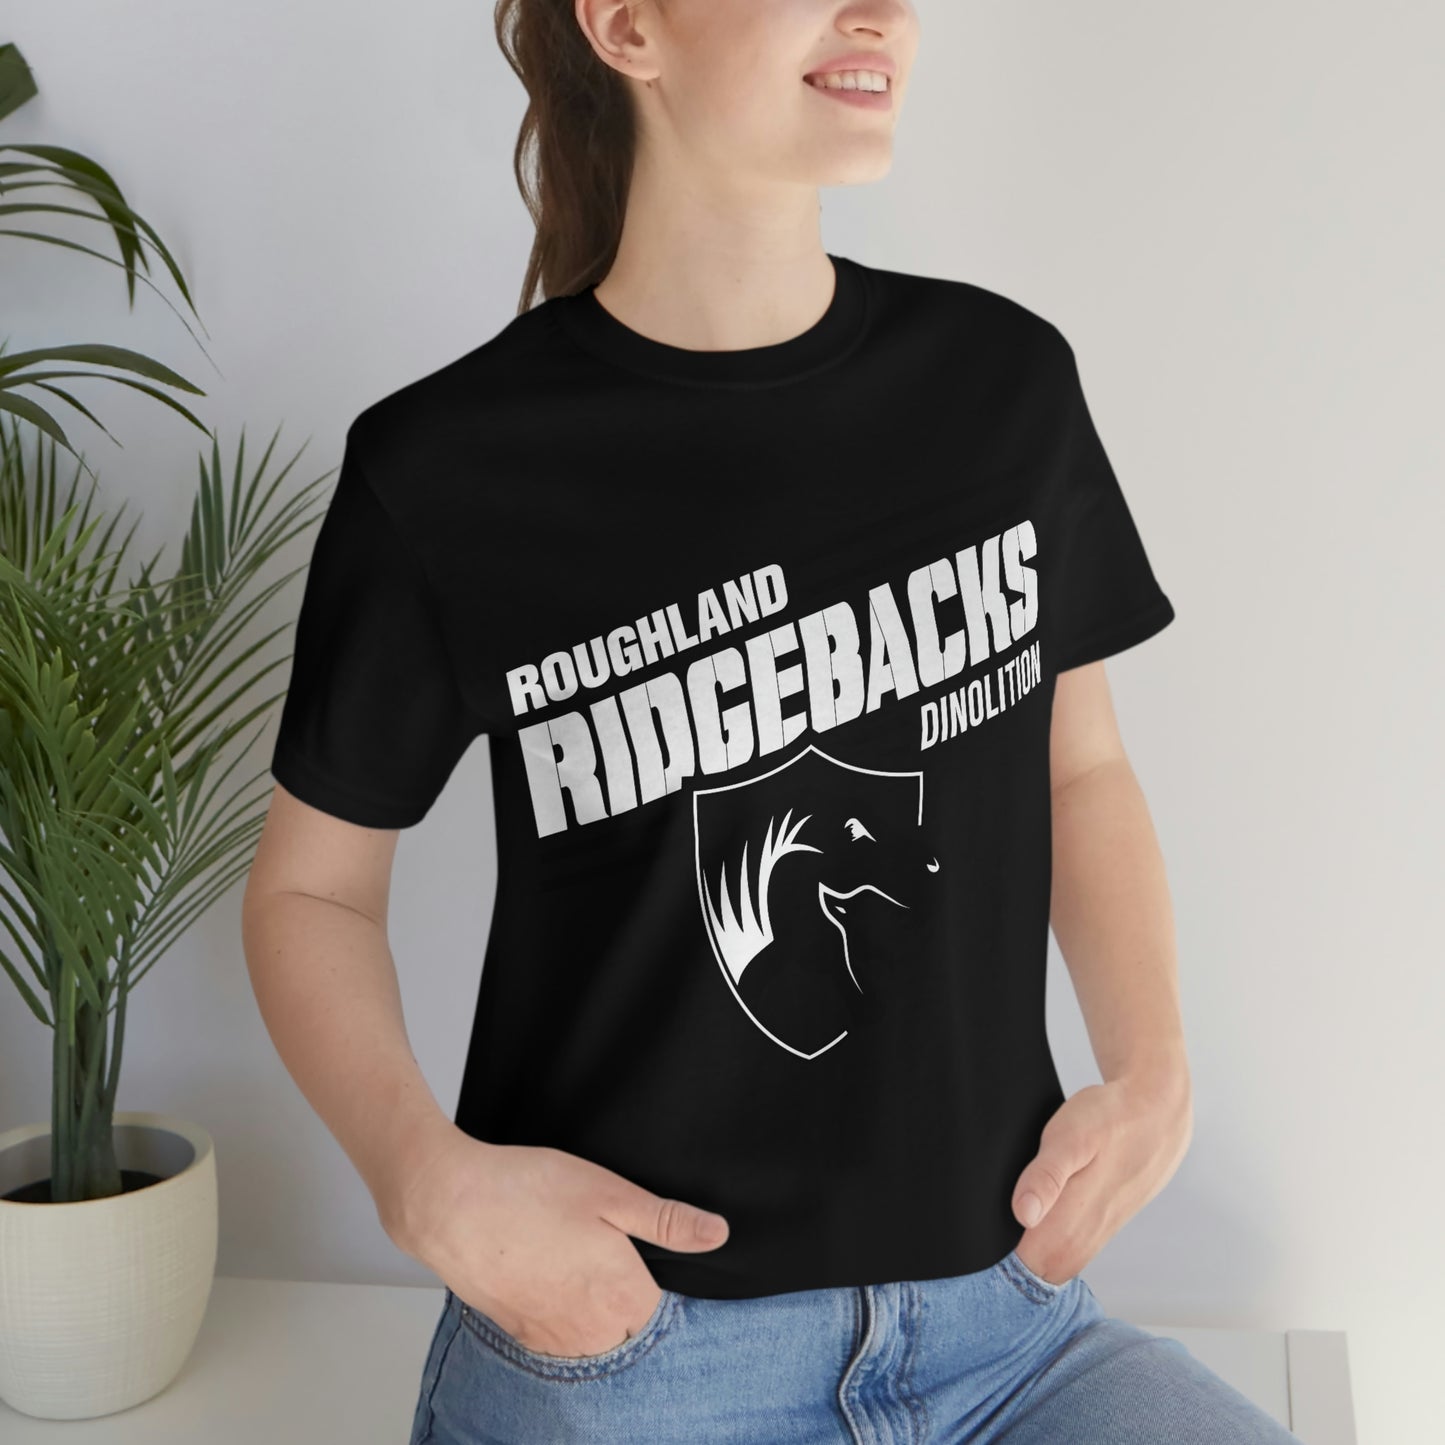 Roughland Ridgebacks Dinolition